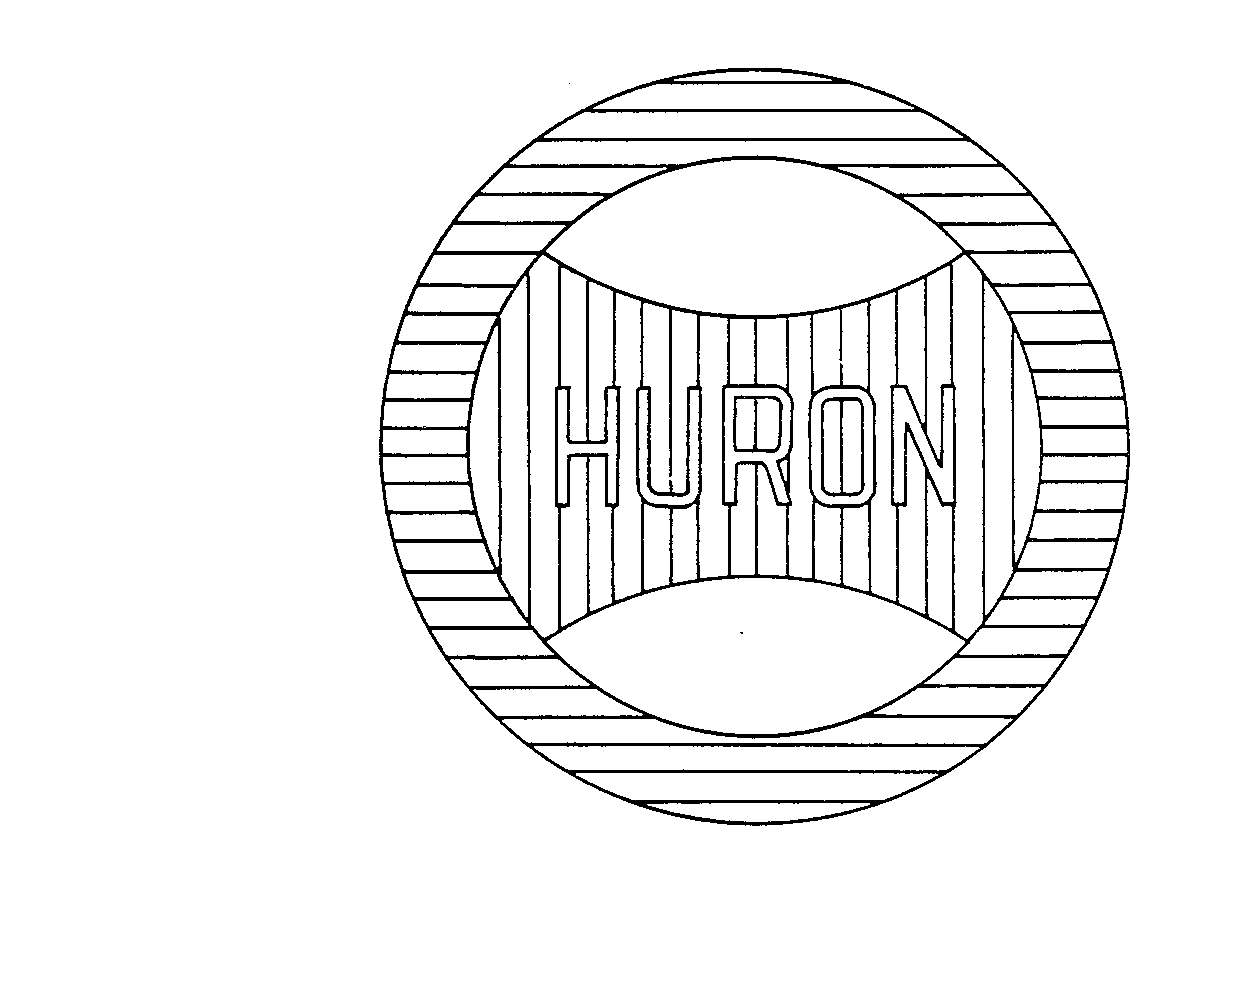  HURON